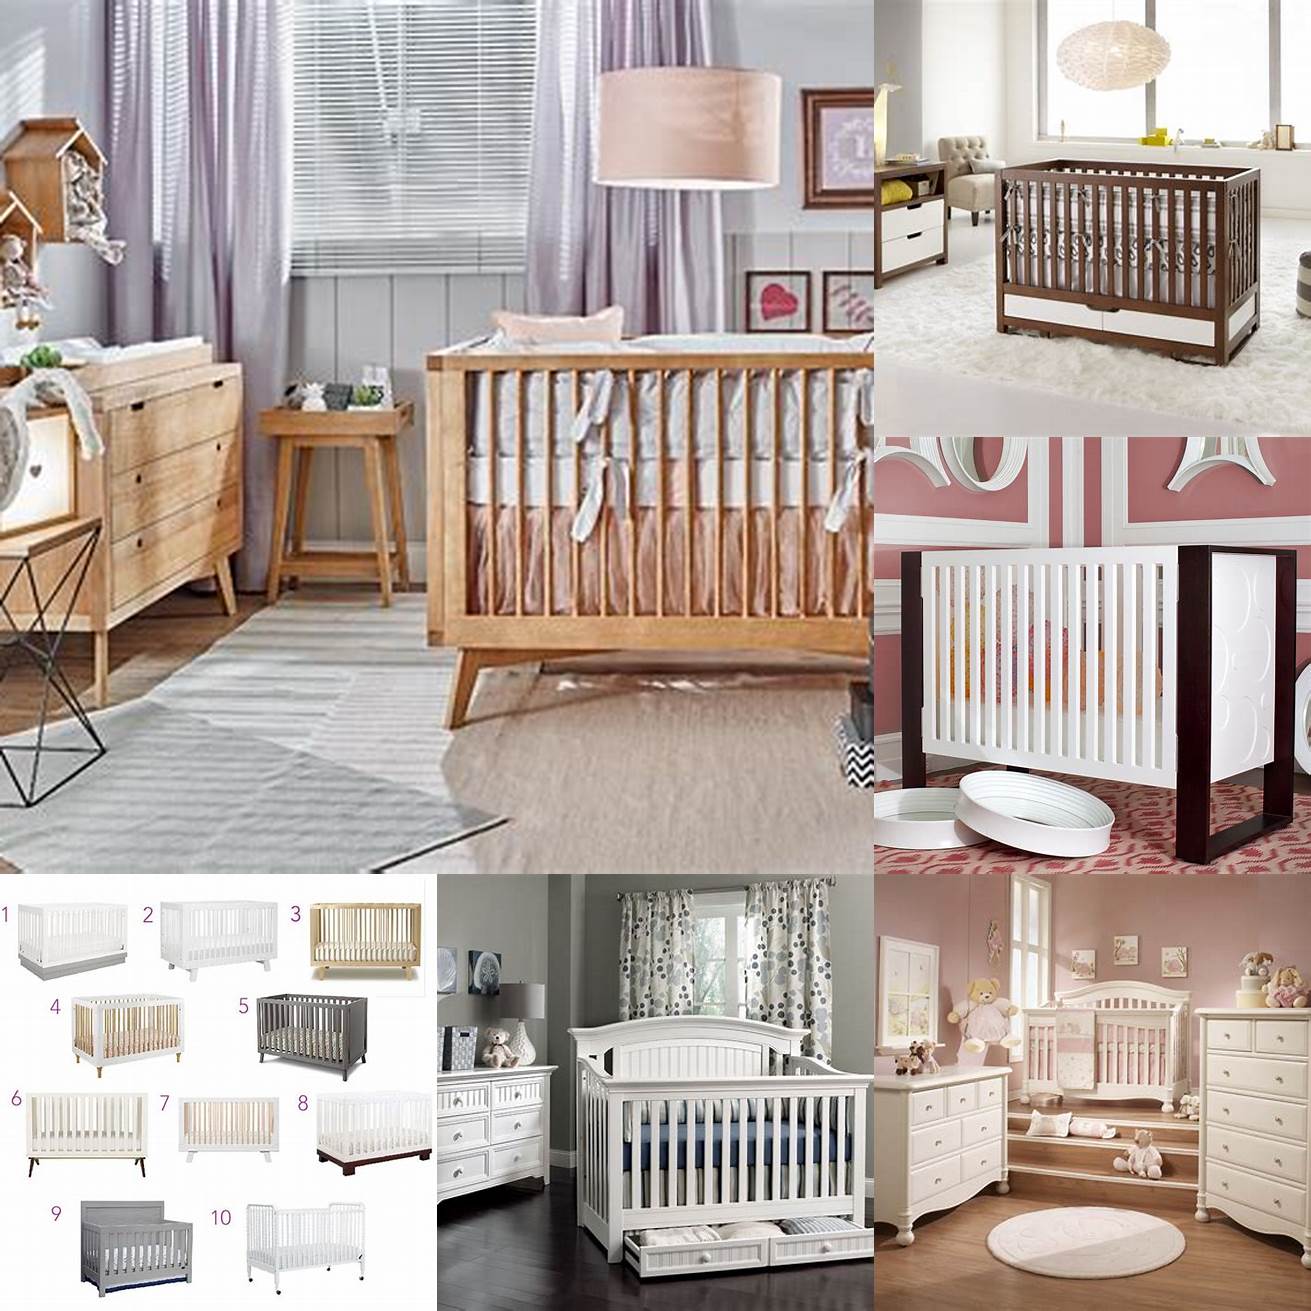 A modern baby furniture set features sleek contemporary designs